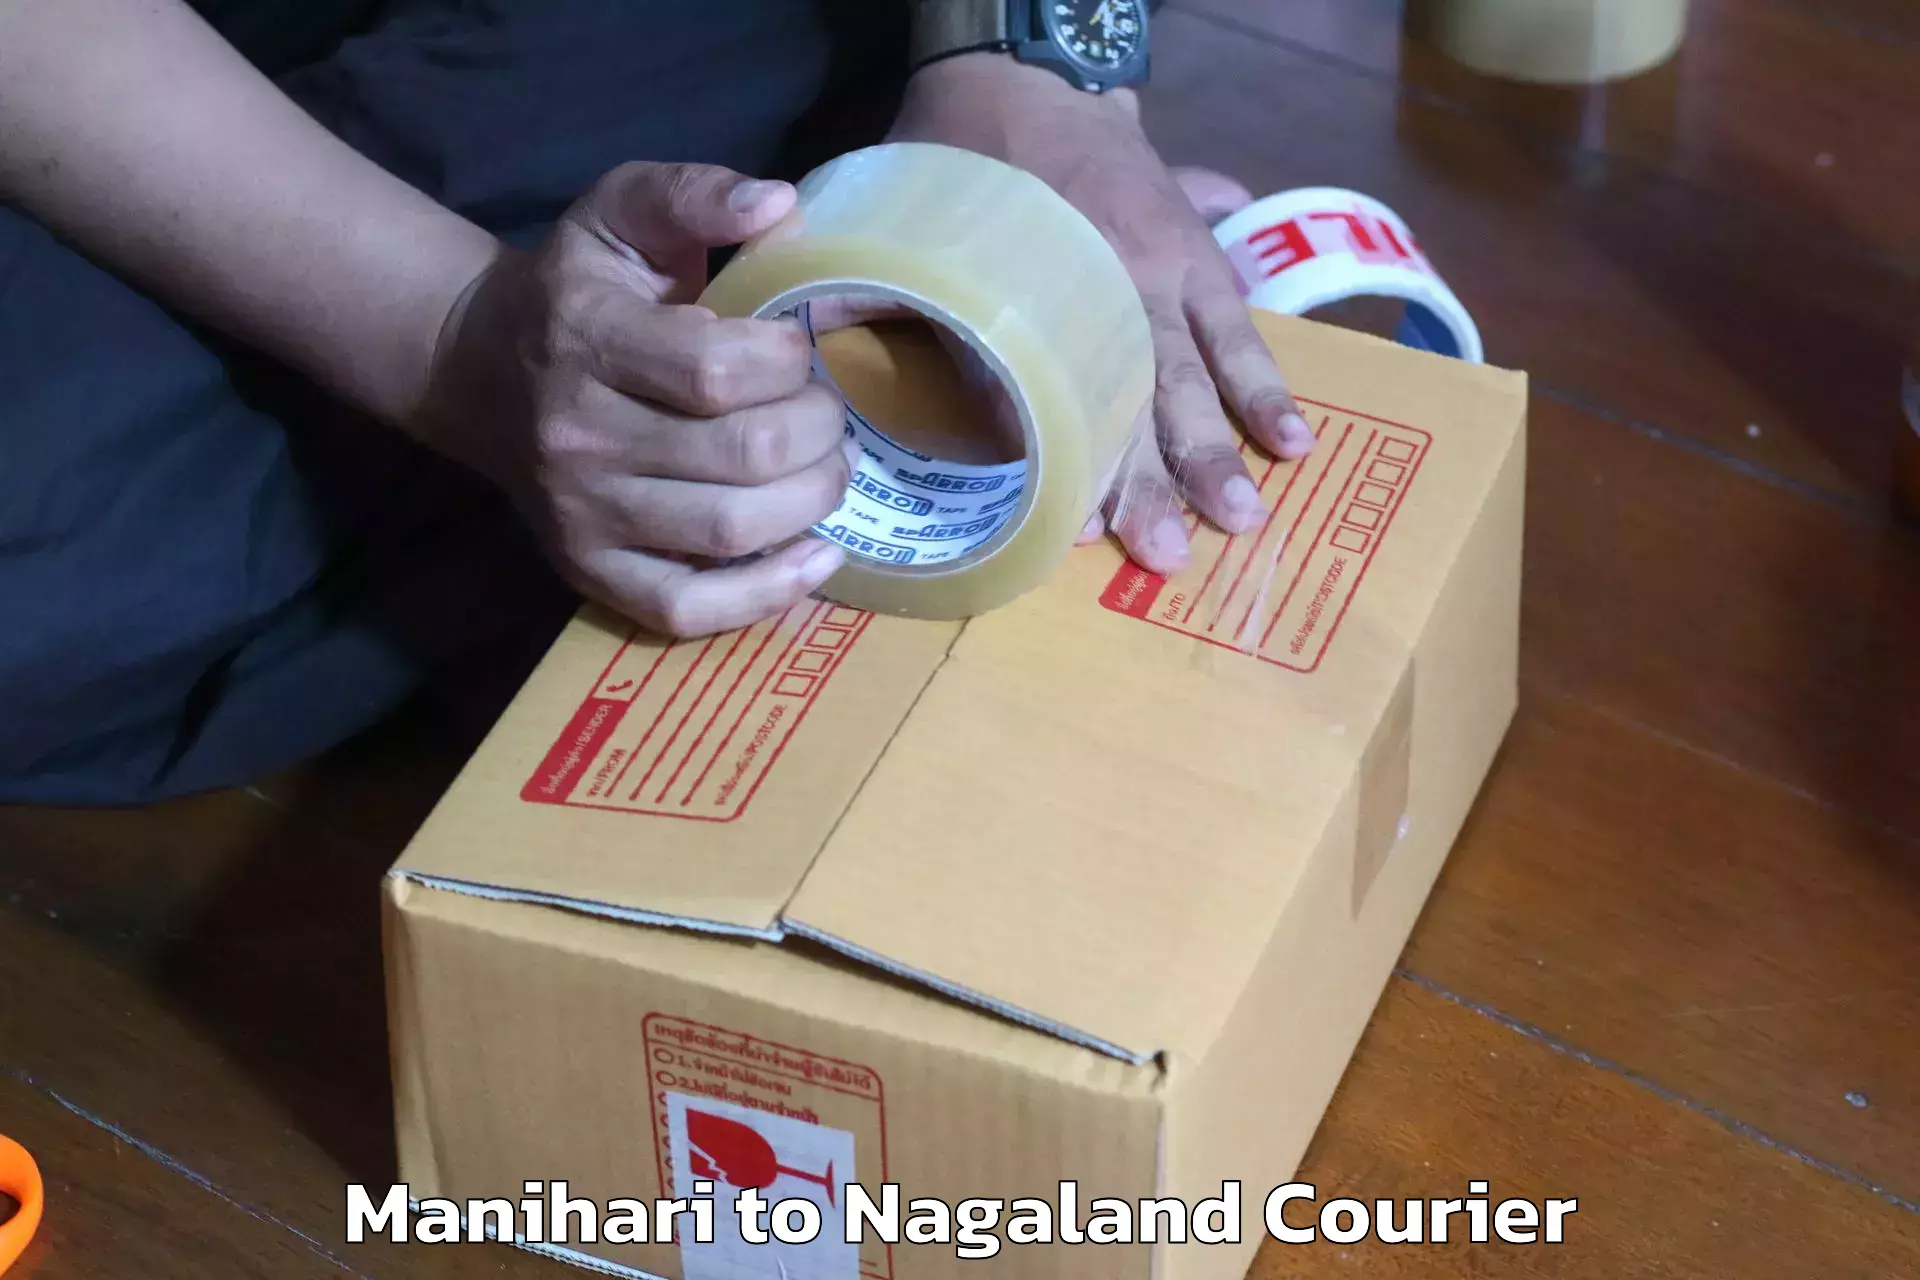 Furniture delivery service Manihari to NIT Nagaland